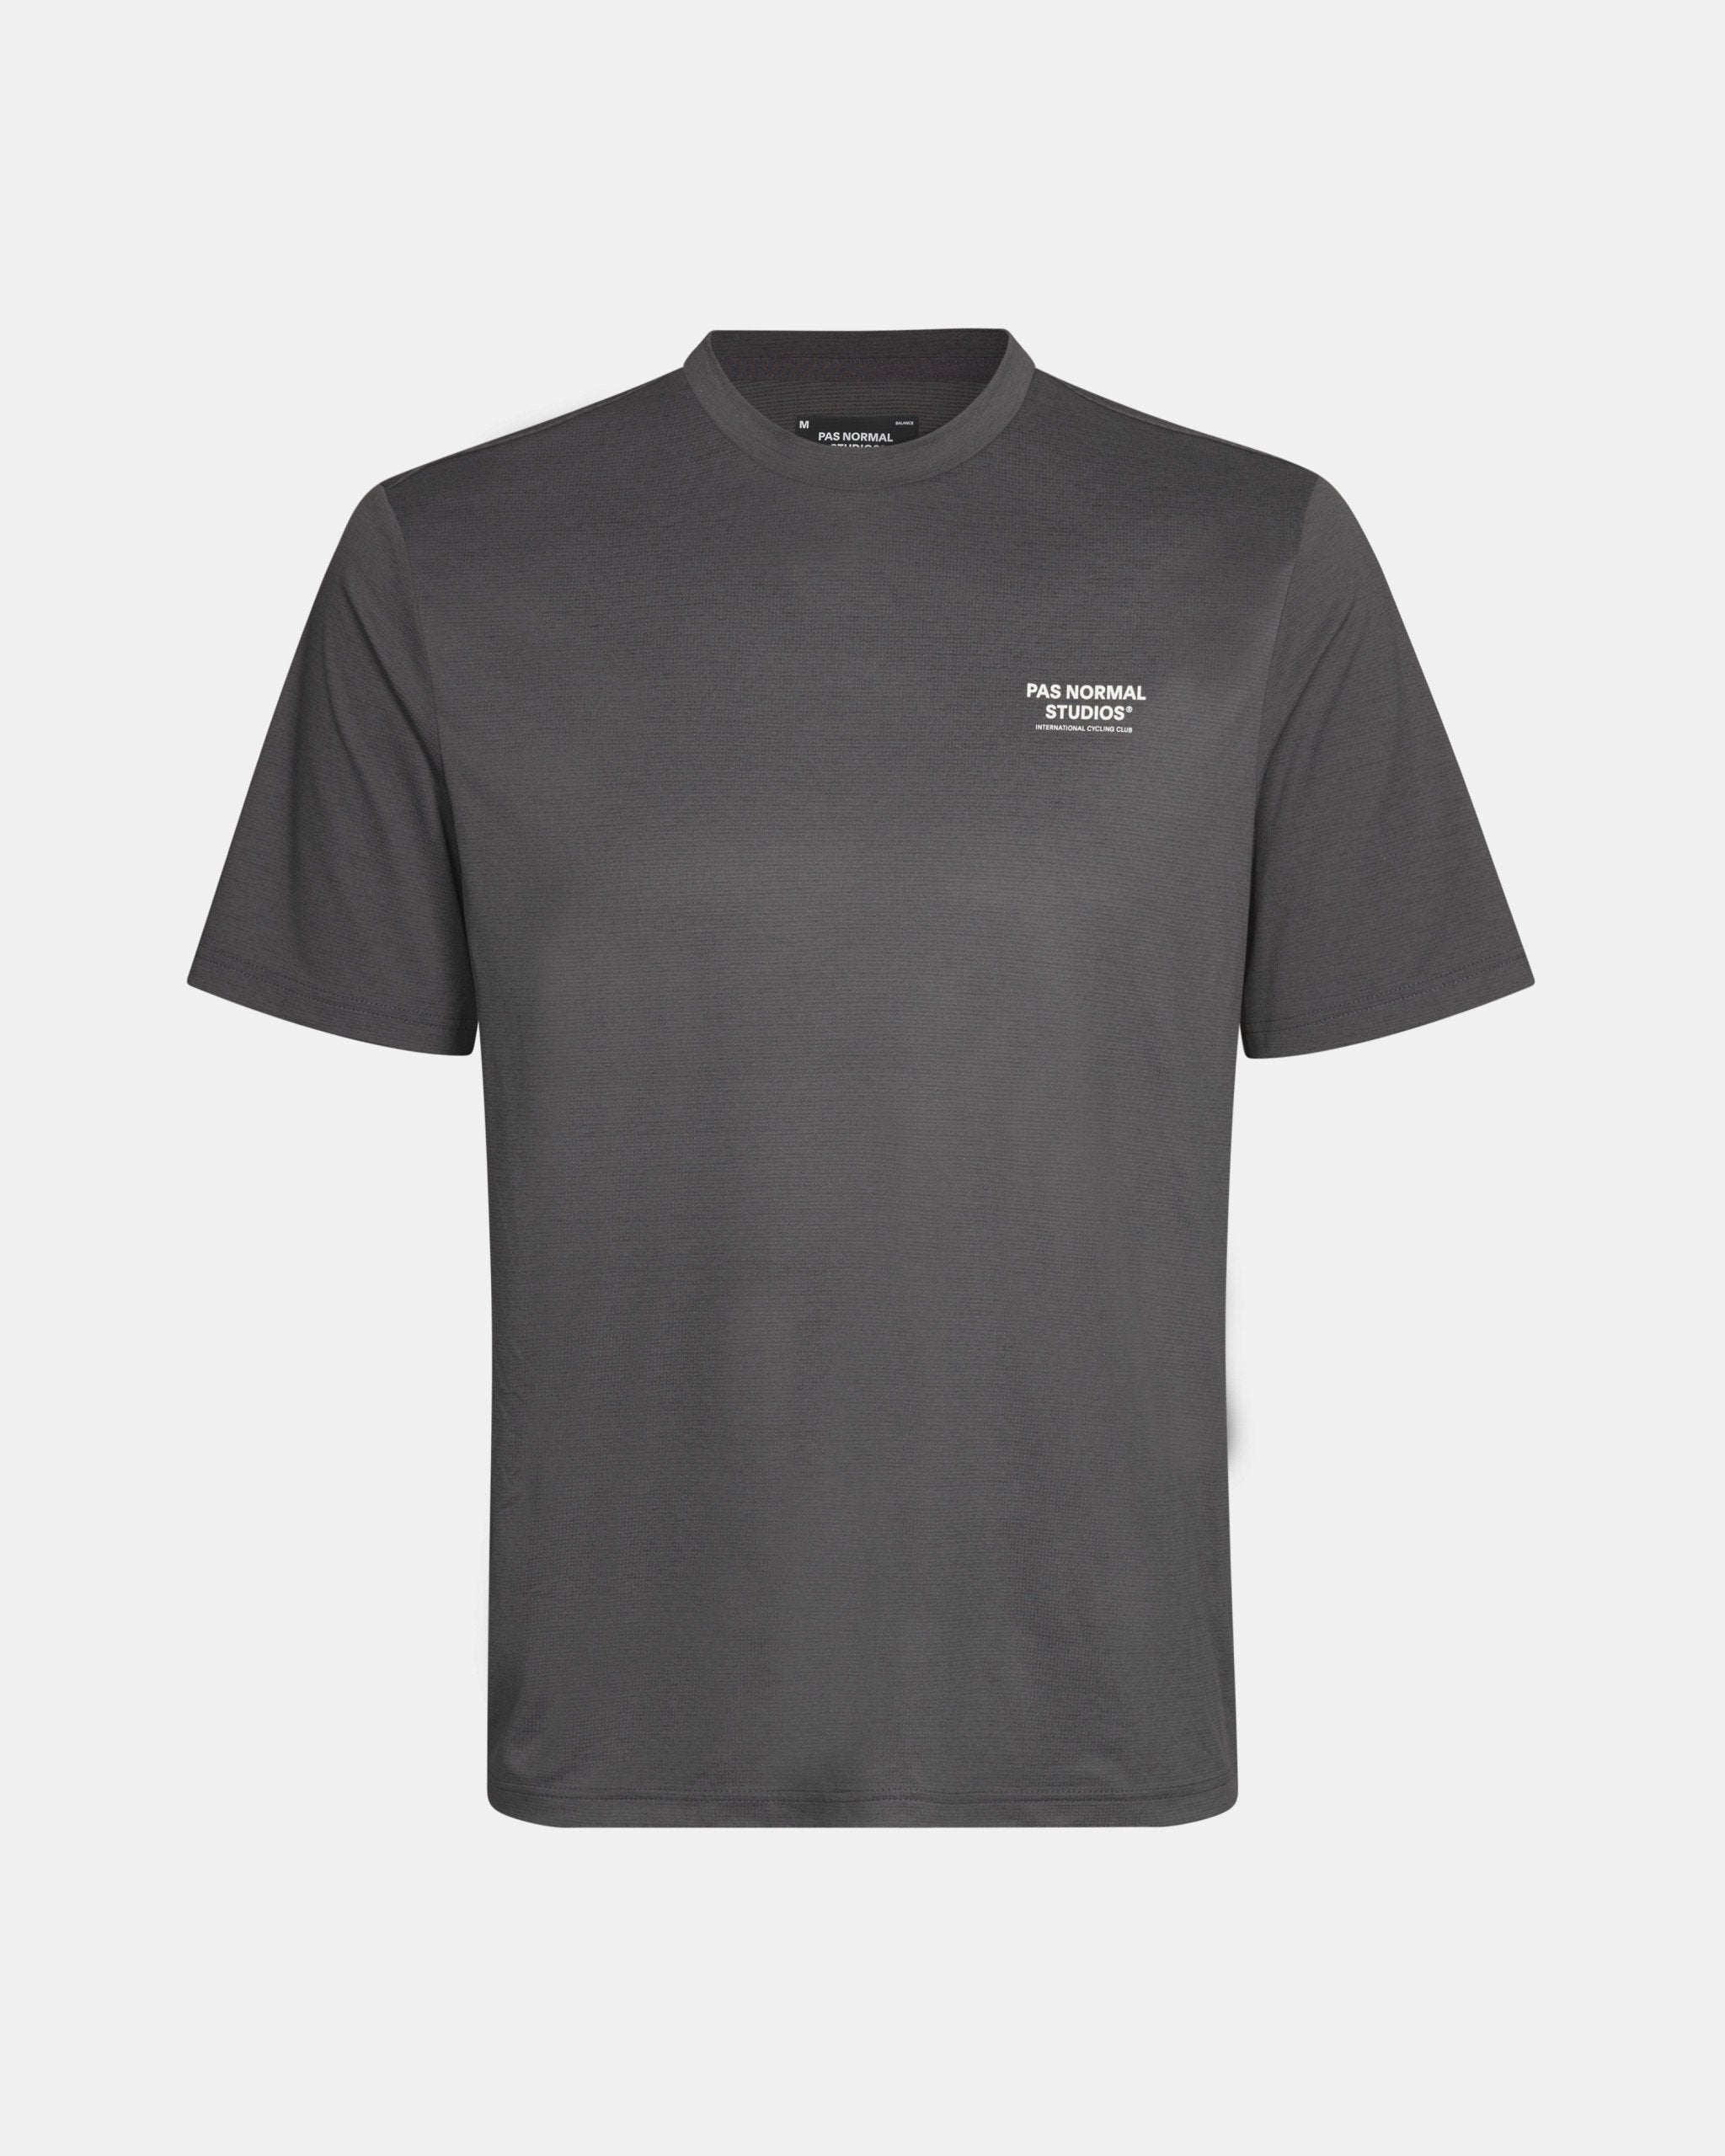 Men's Balance T-shirt - Stone Grey